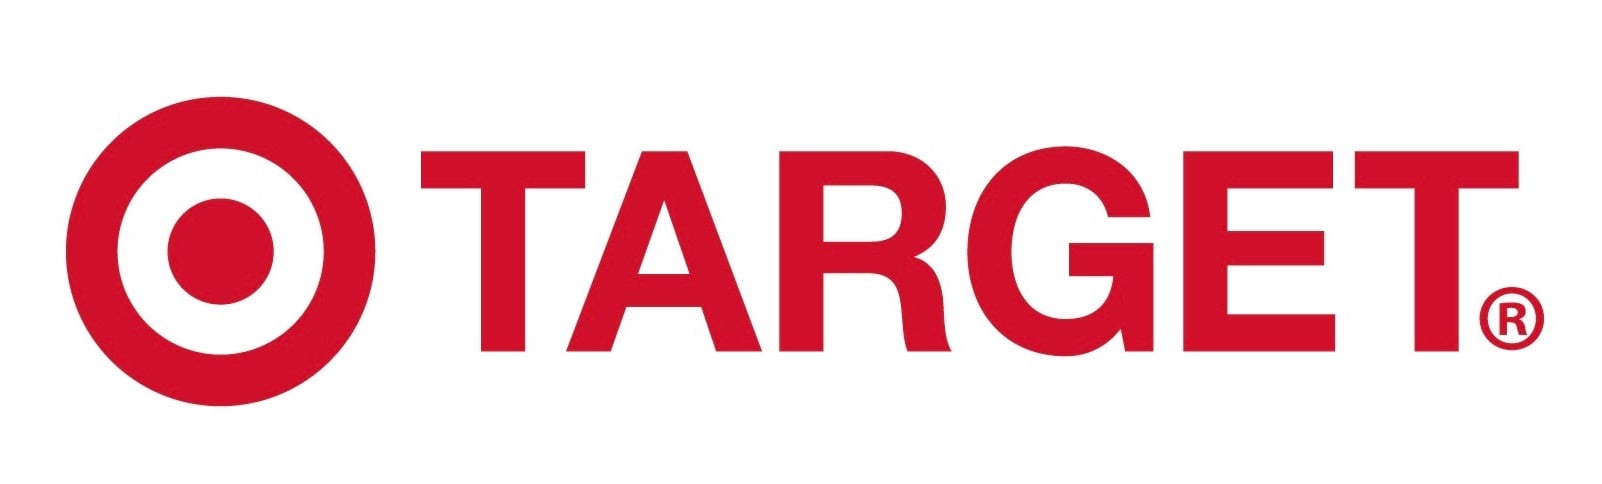 target-logo-resized-1